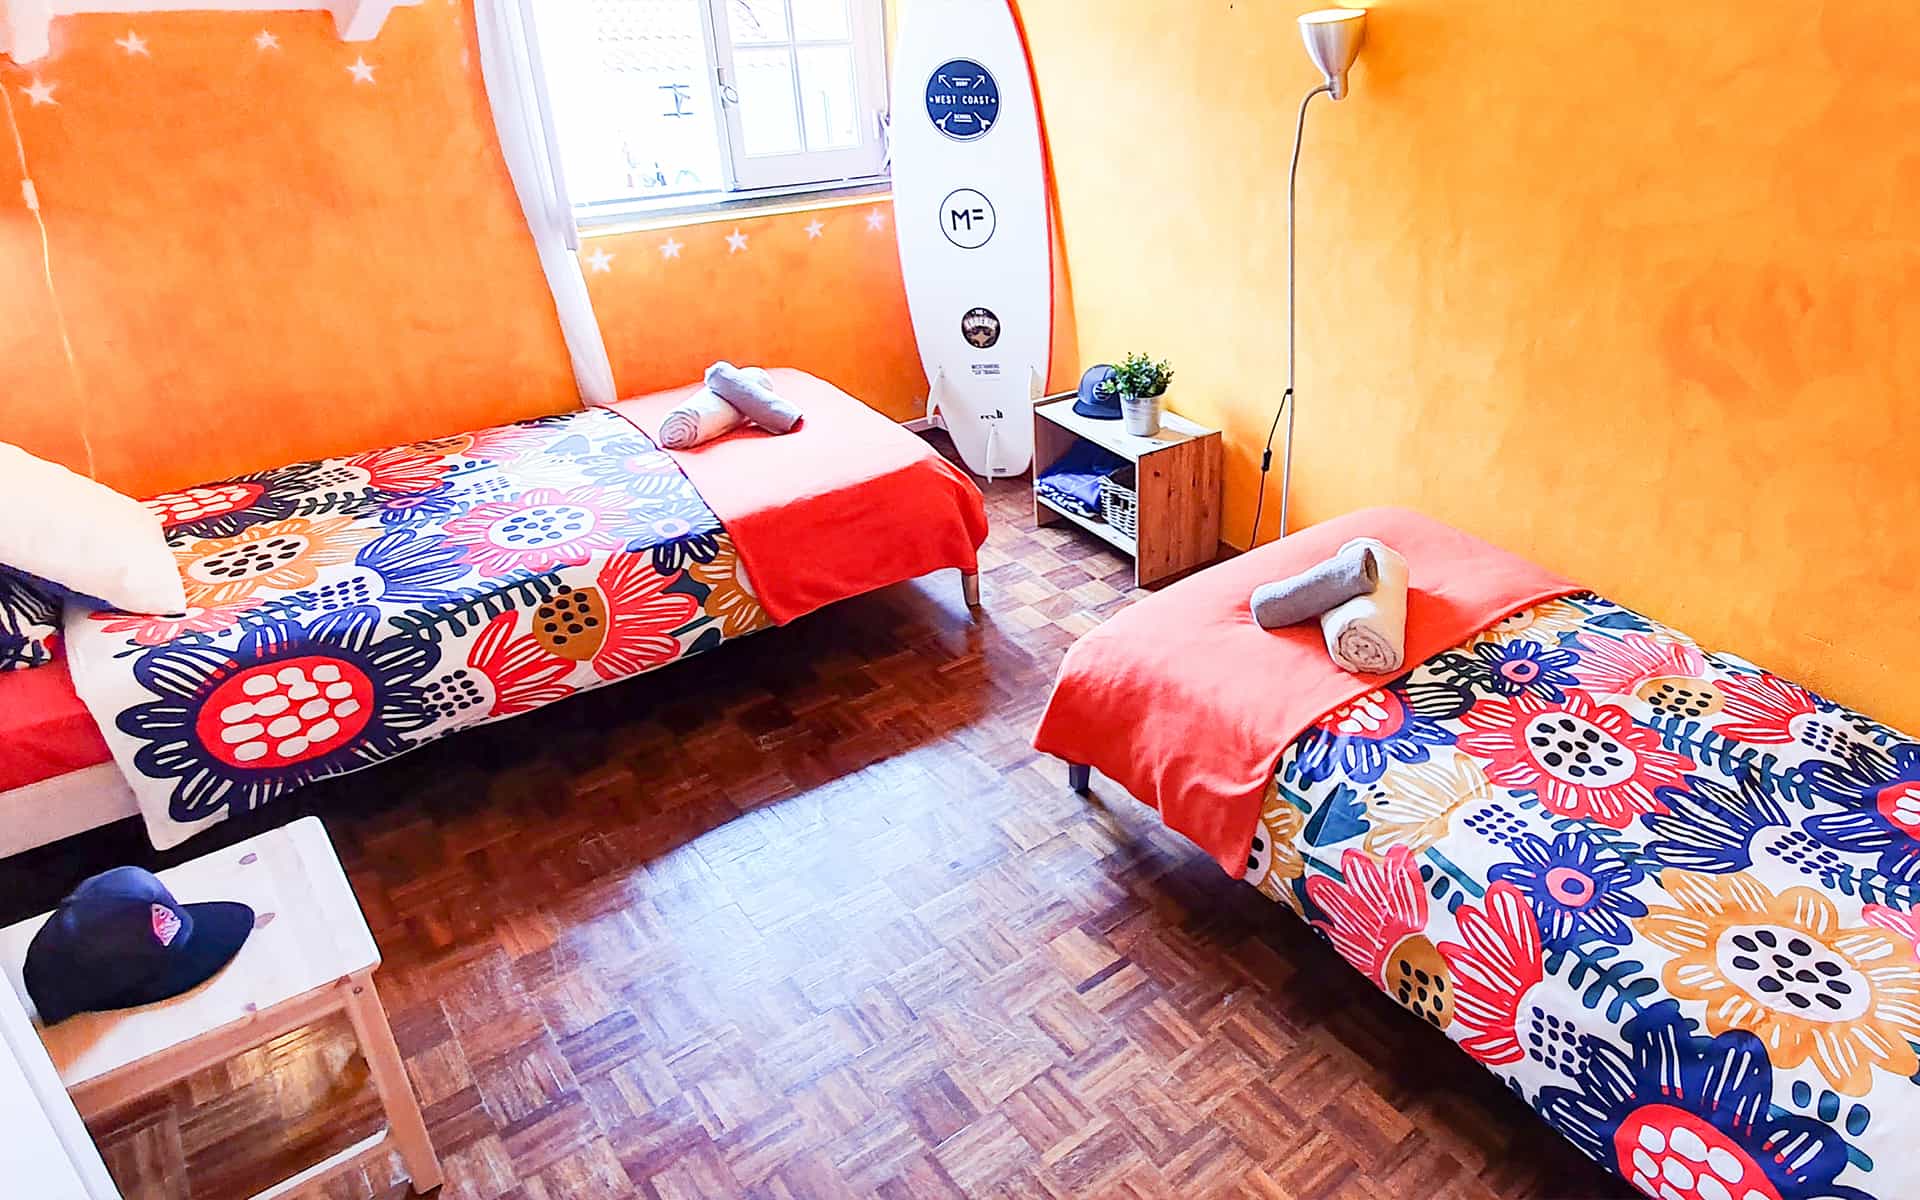 surf camp ericeira - Booking Rooms - Orange Room